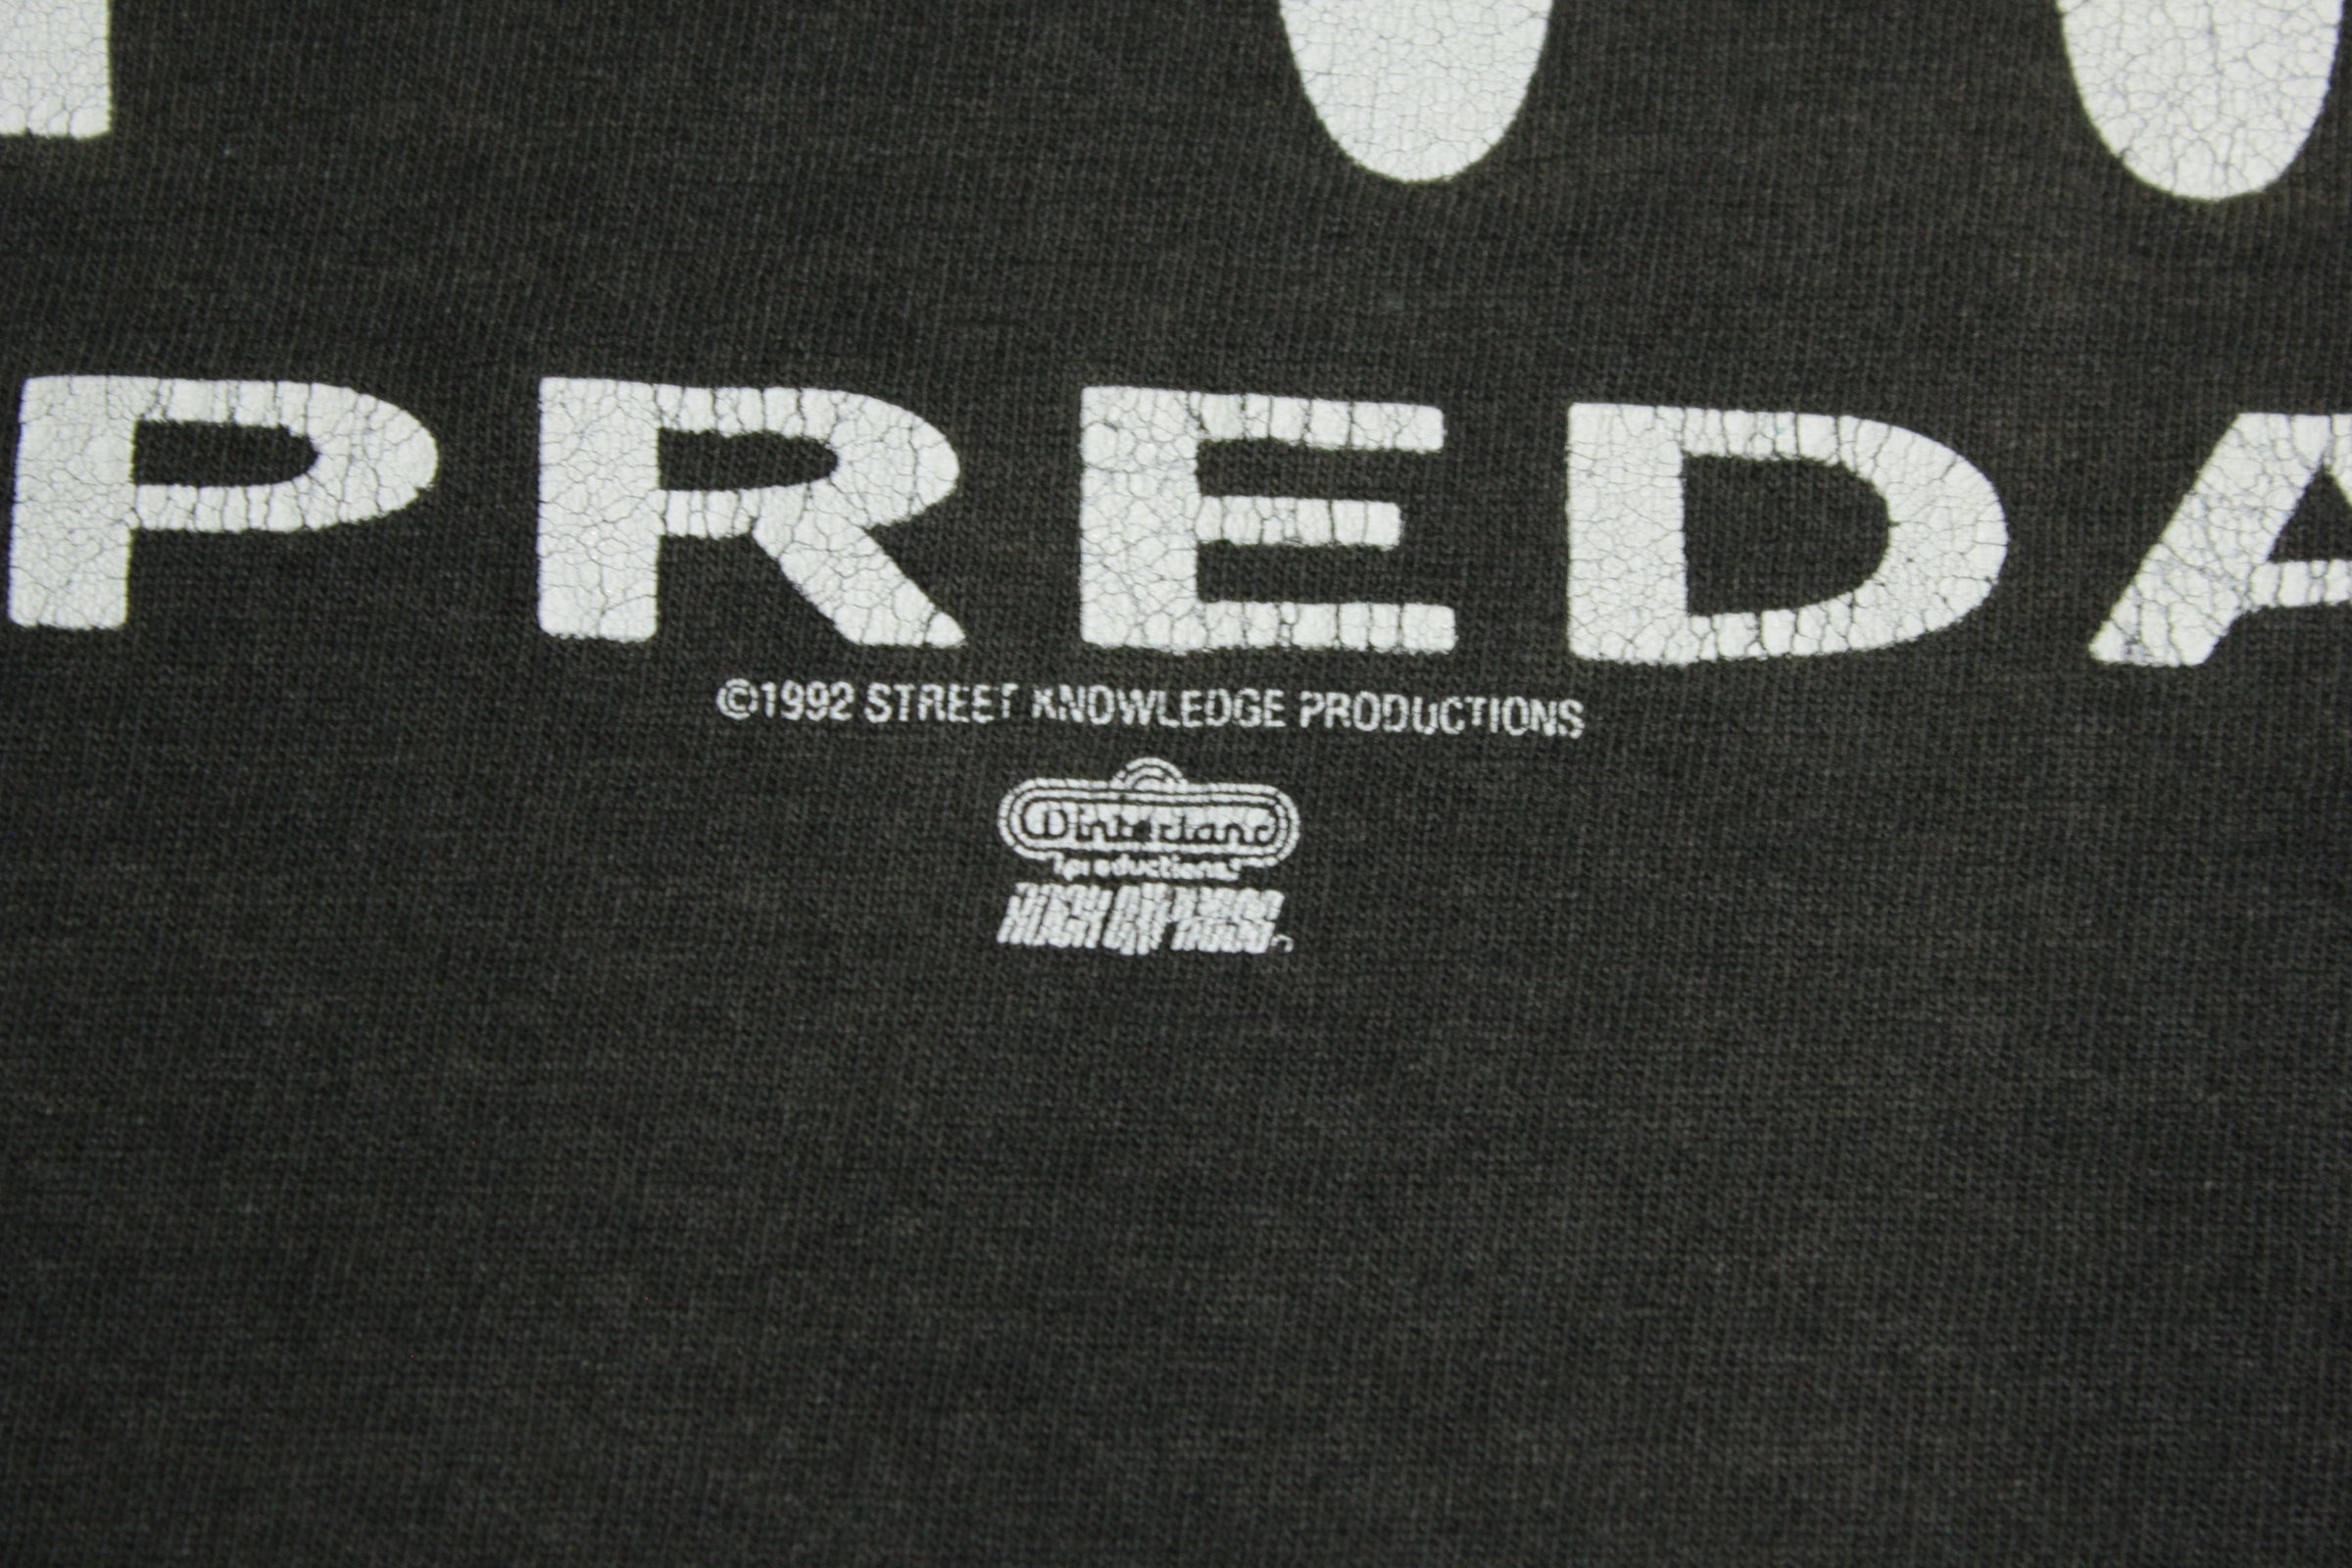 RP230-010-BK. Ice Cube - The Predator - T-shirt